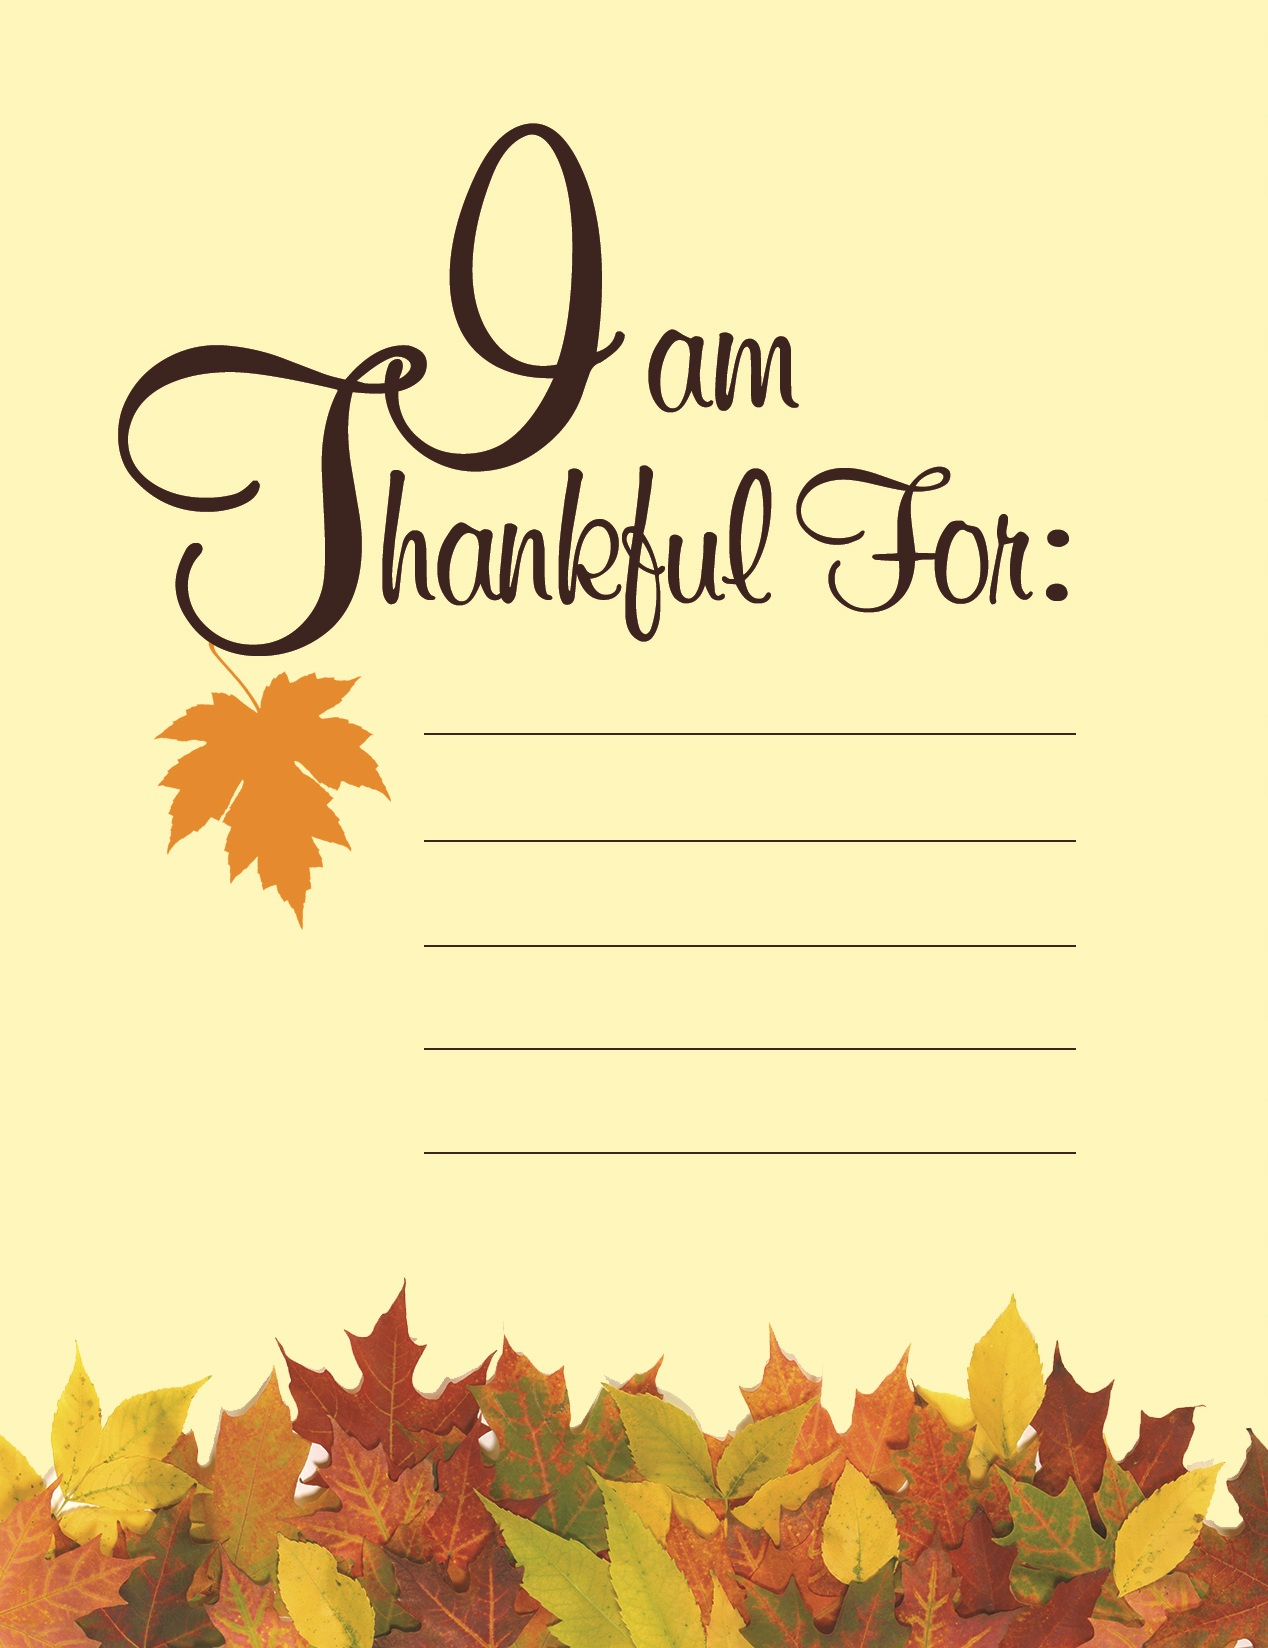 Gratitude This Thanksgiving | American Greetings Blog - Free Printable Thanksgiving Cards